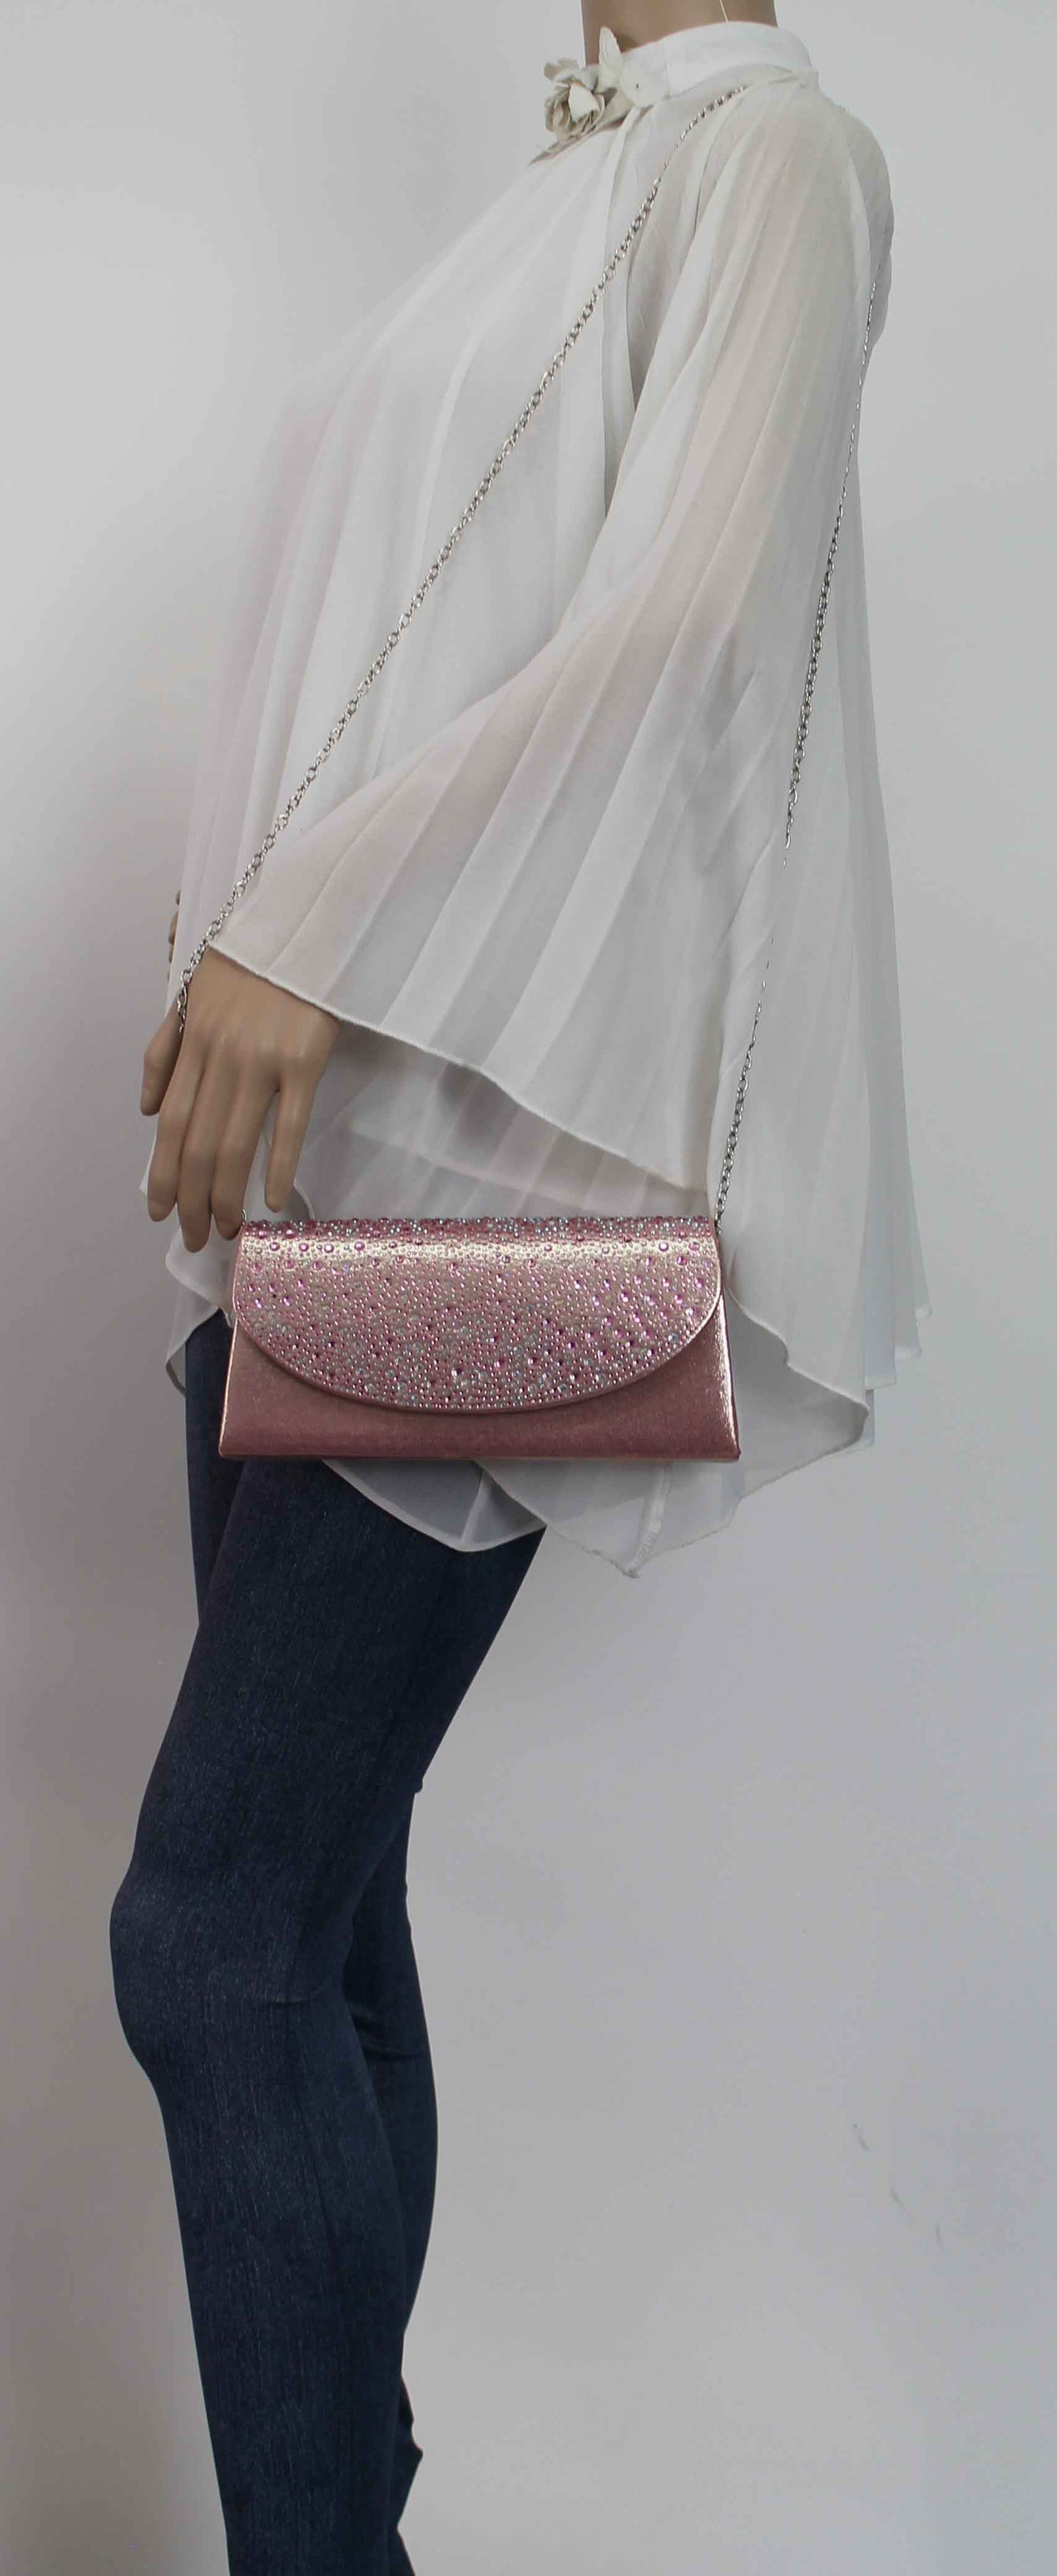 SWANKYSWANS Rita Diamante Clutch Bag Pink Cute Cheap Clutch Bag For Weddings School and Work